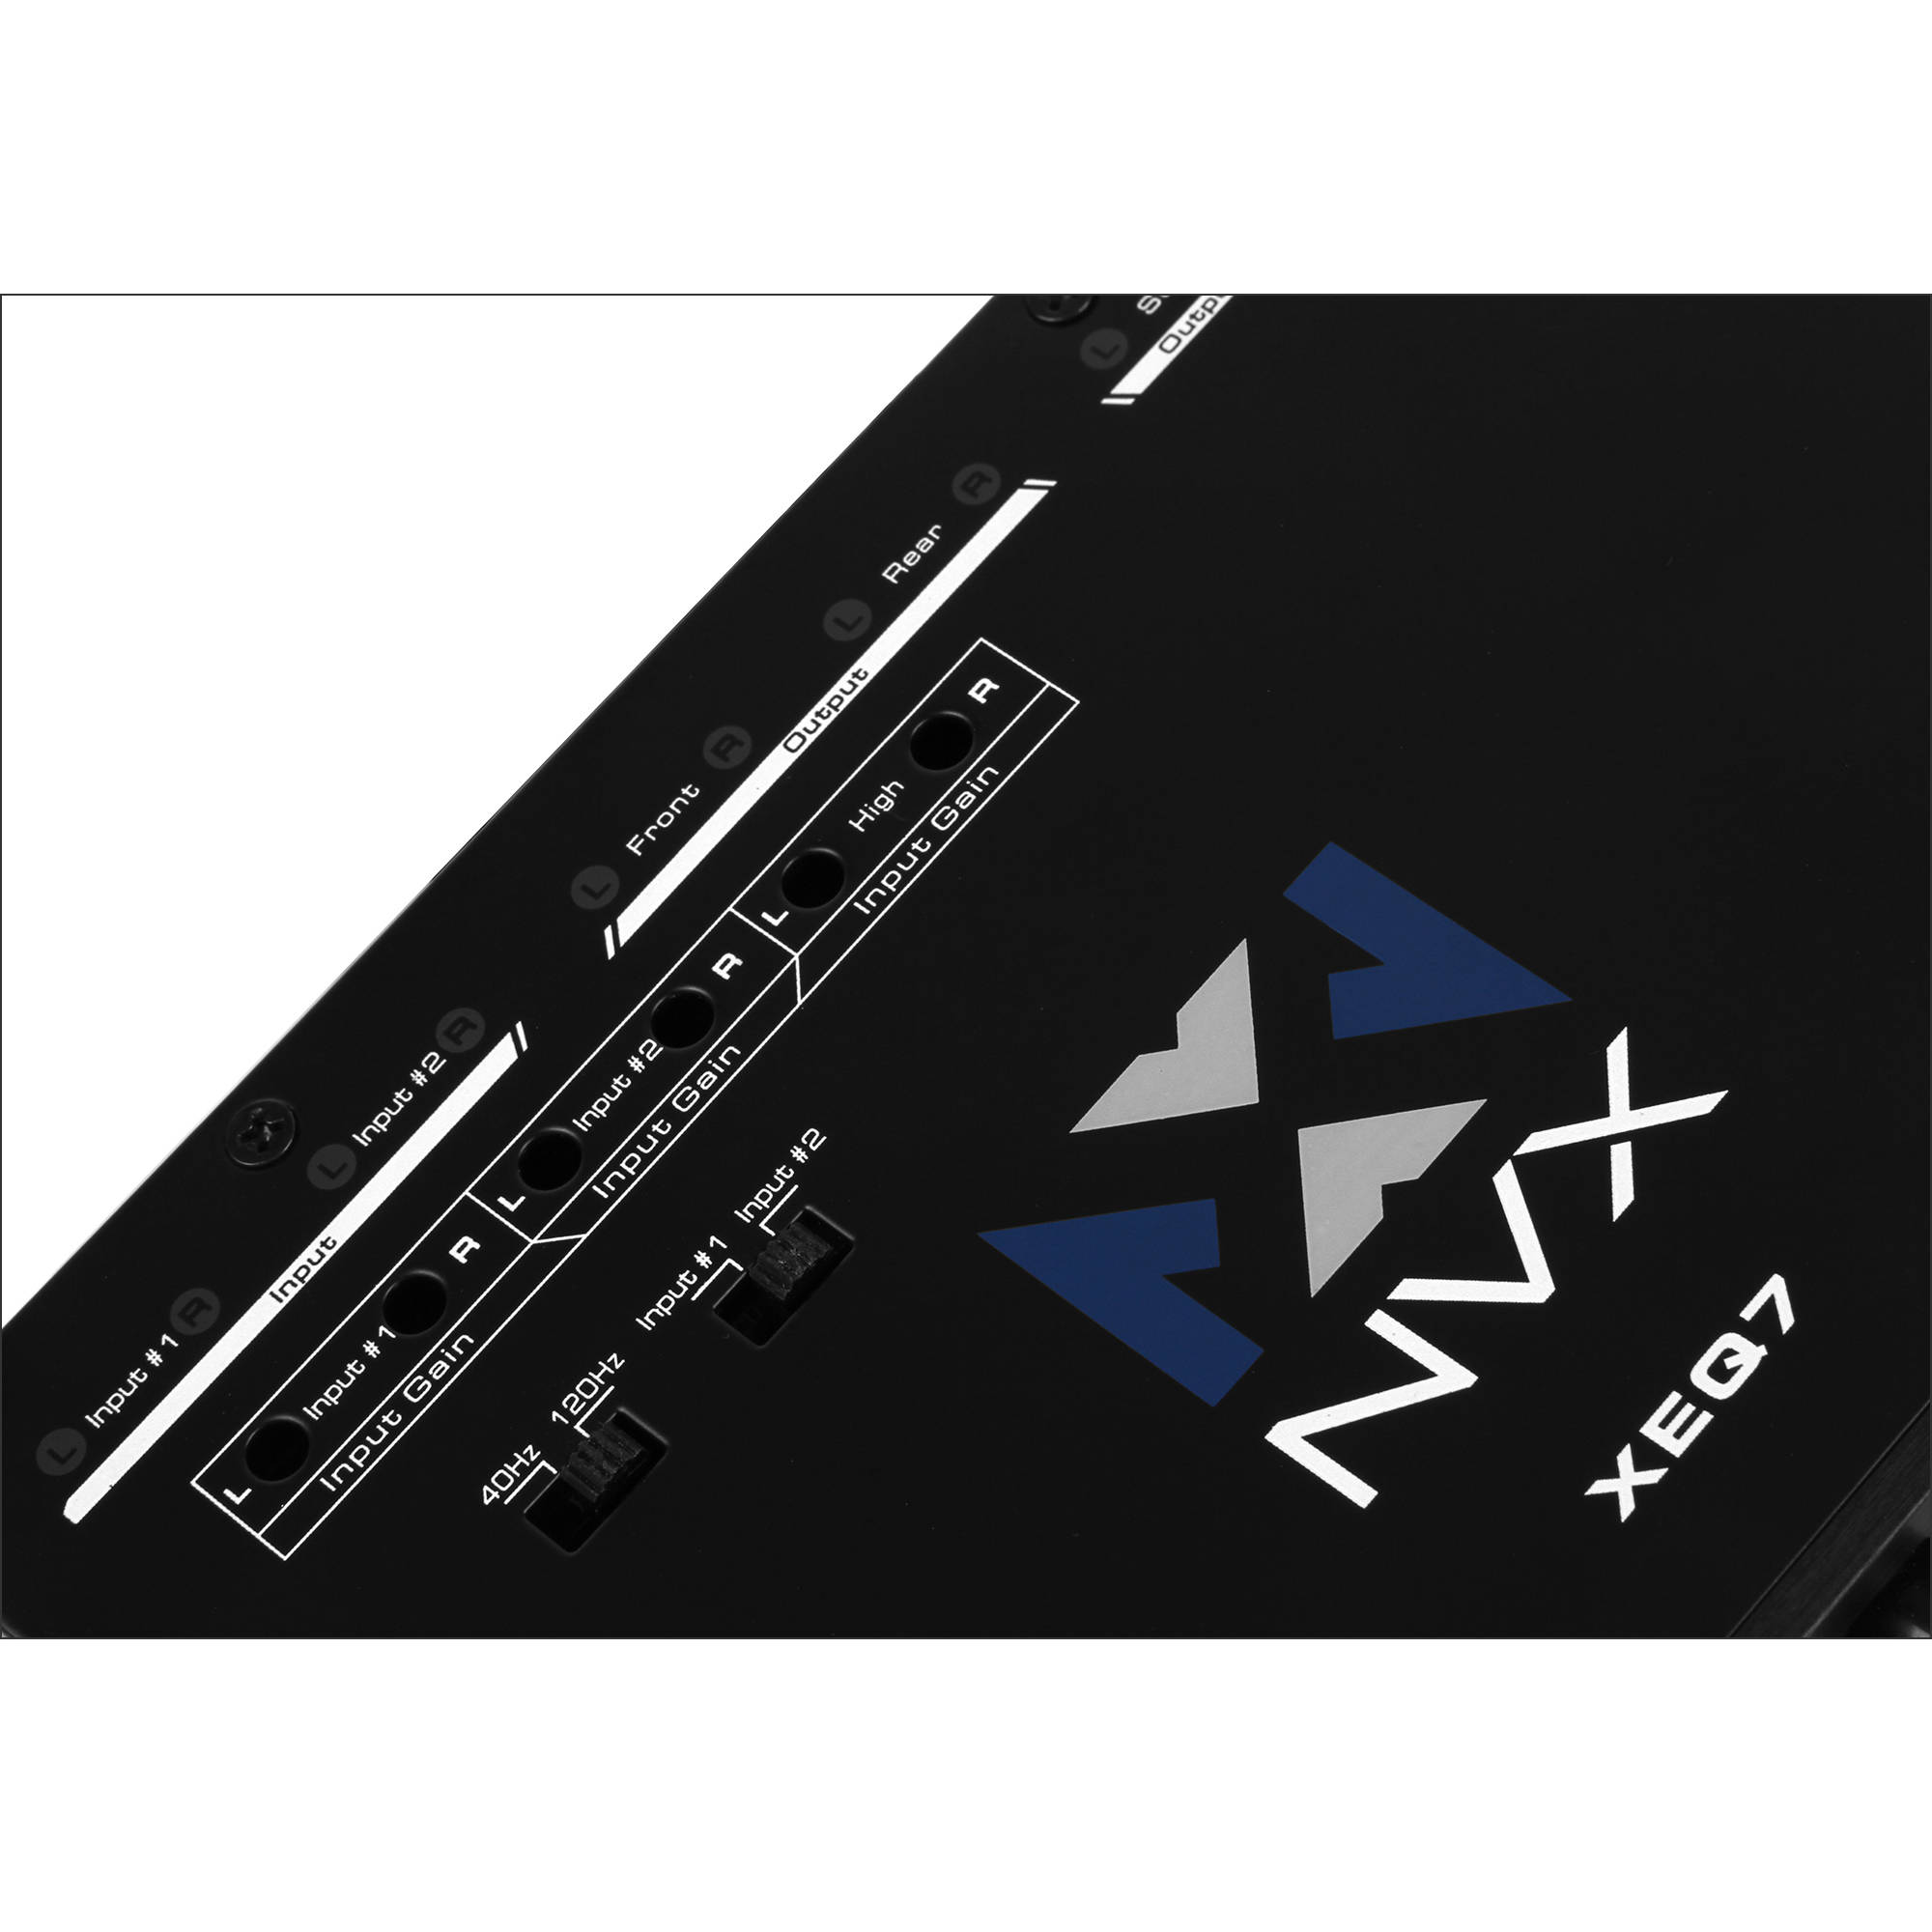 NVX XEQ7 - Car - equalizer - external - image 5 of 10